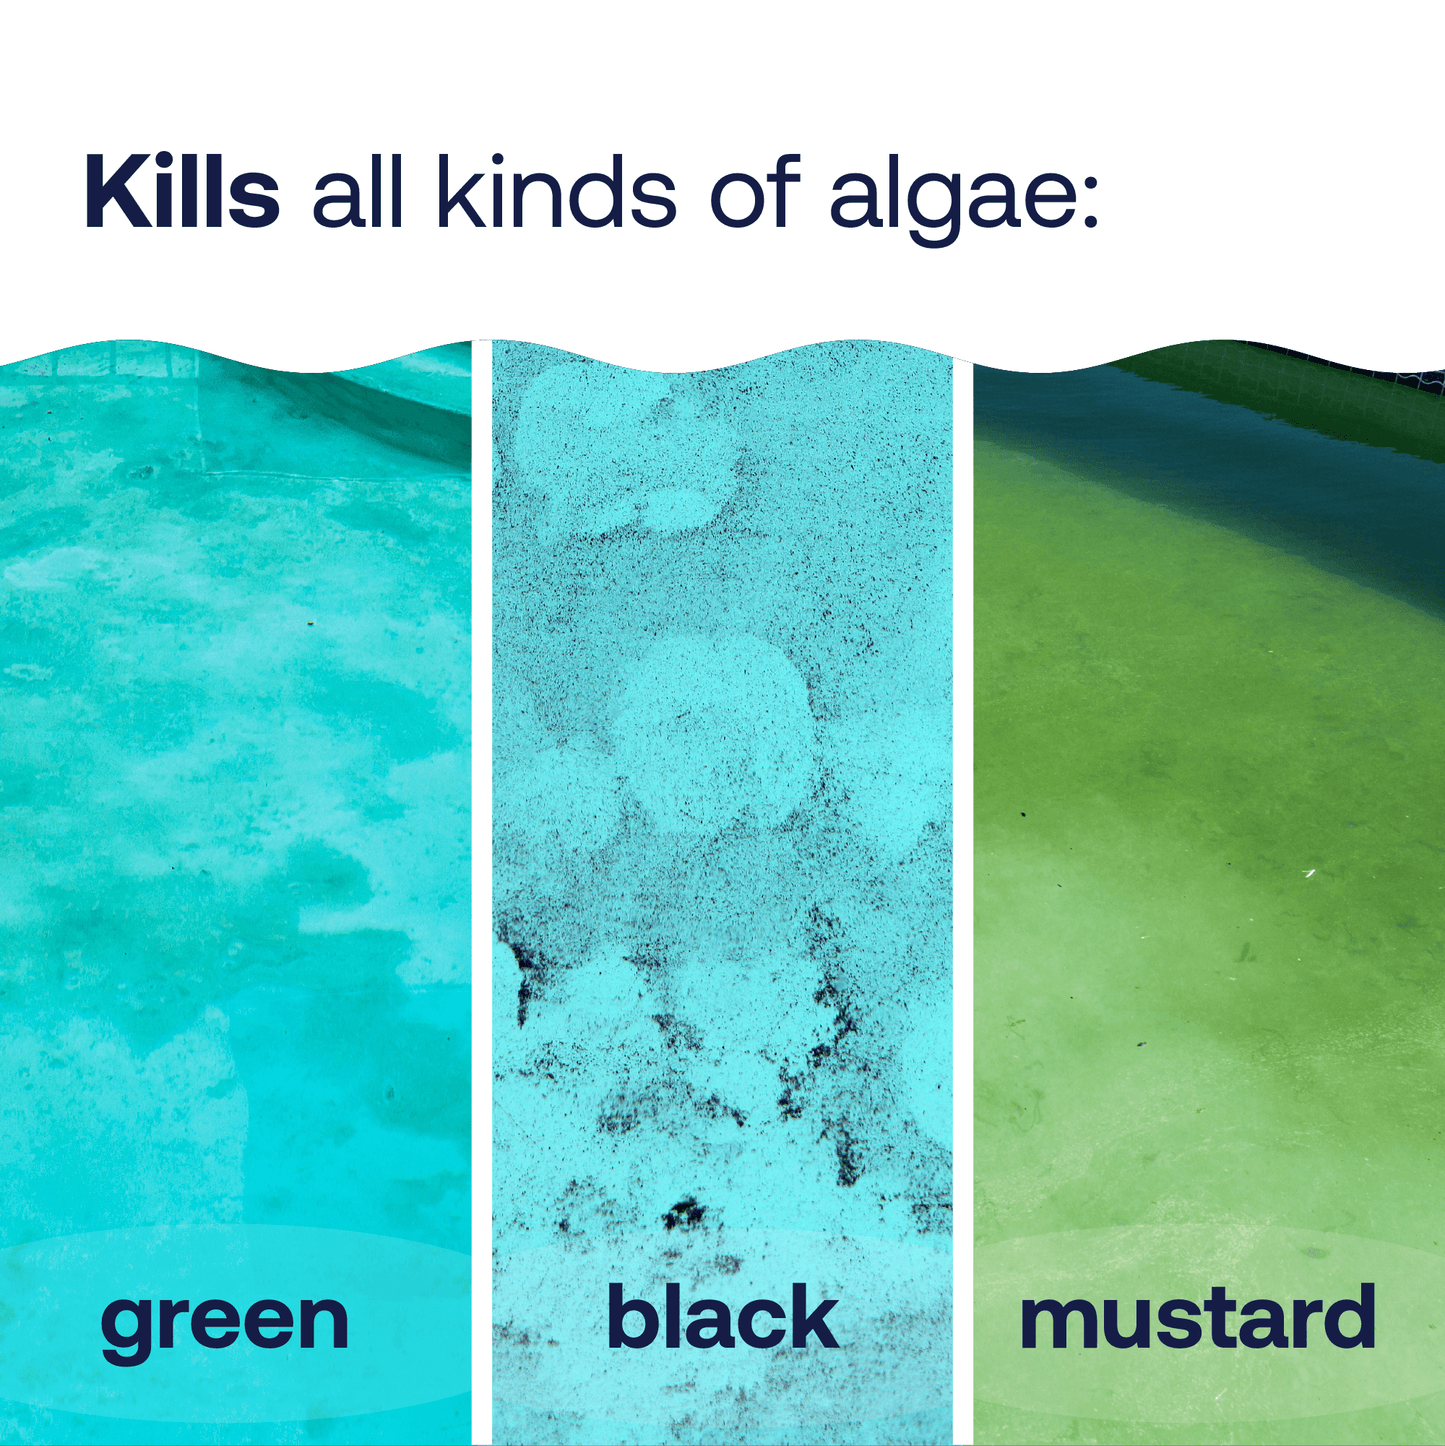 HTH™ Pool Care Algae Guard Ultra: Pool Algae Remover